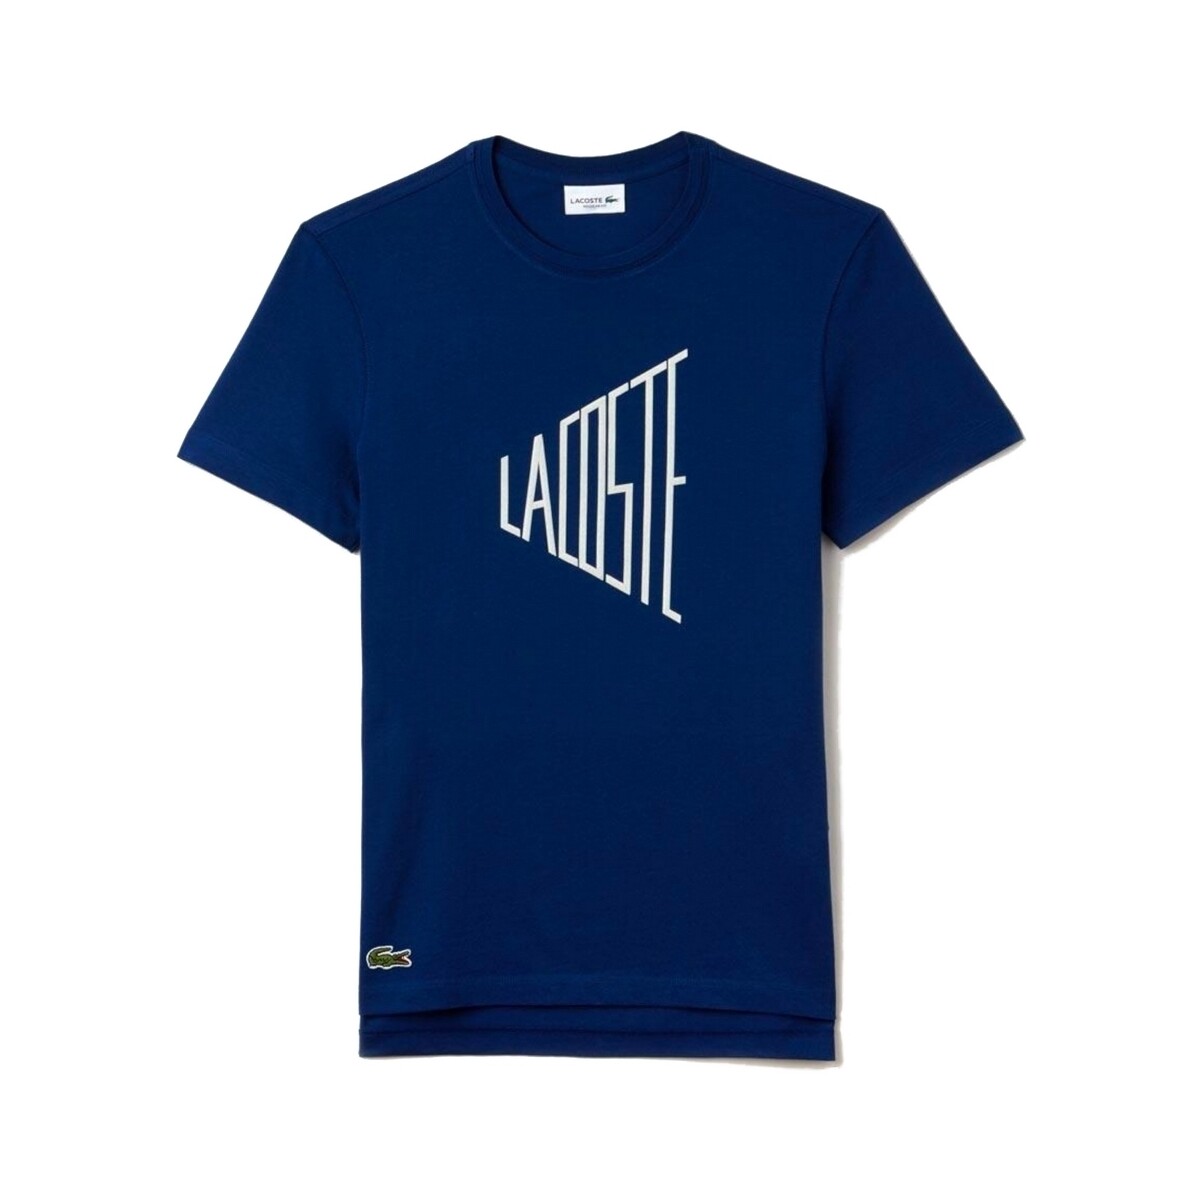 Textil Homem T-Shirt mangas curtas Lacoste TH3209 Azul